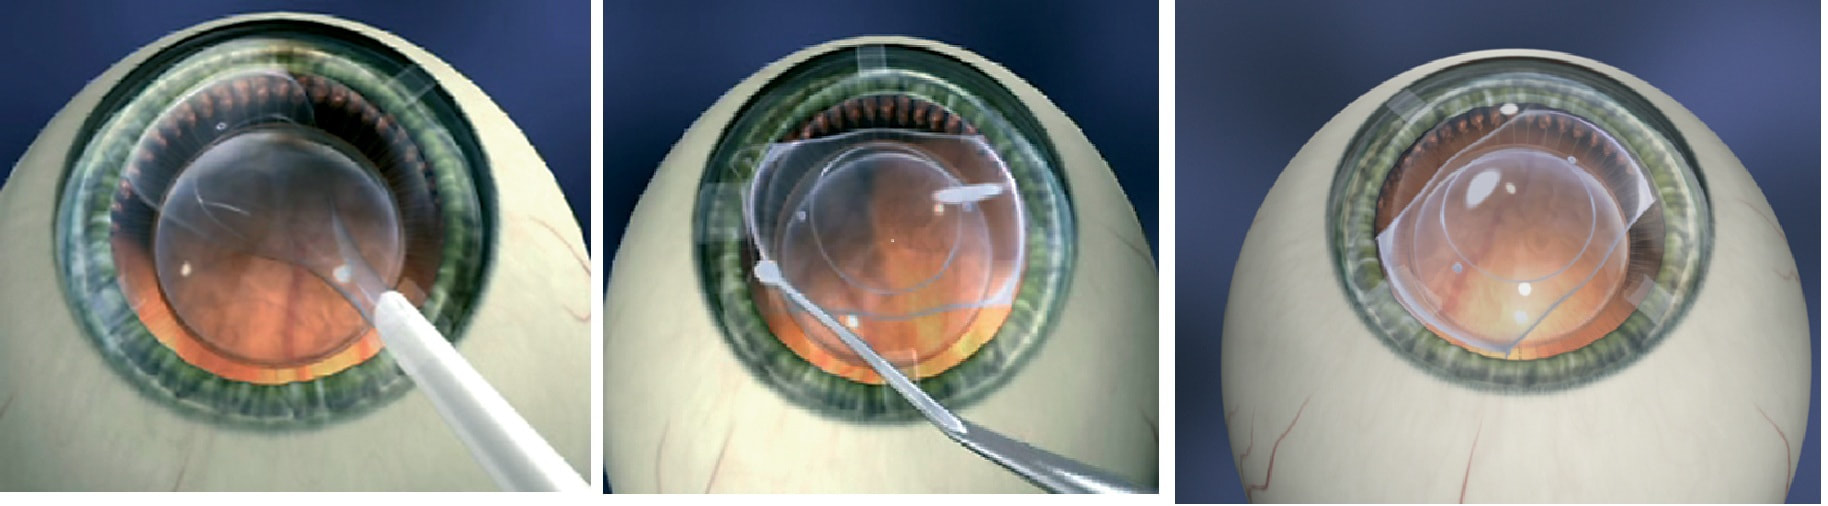 implantation ICL lens